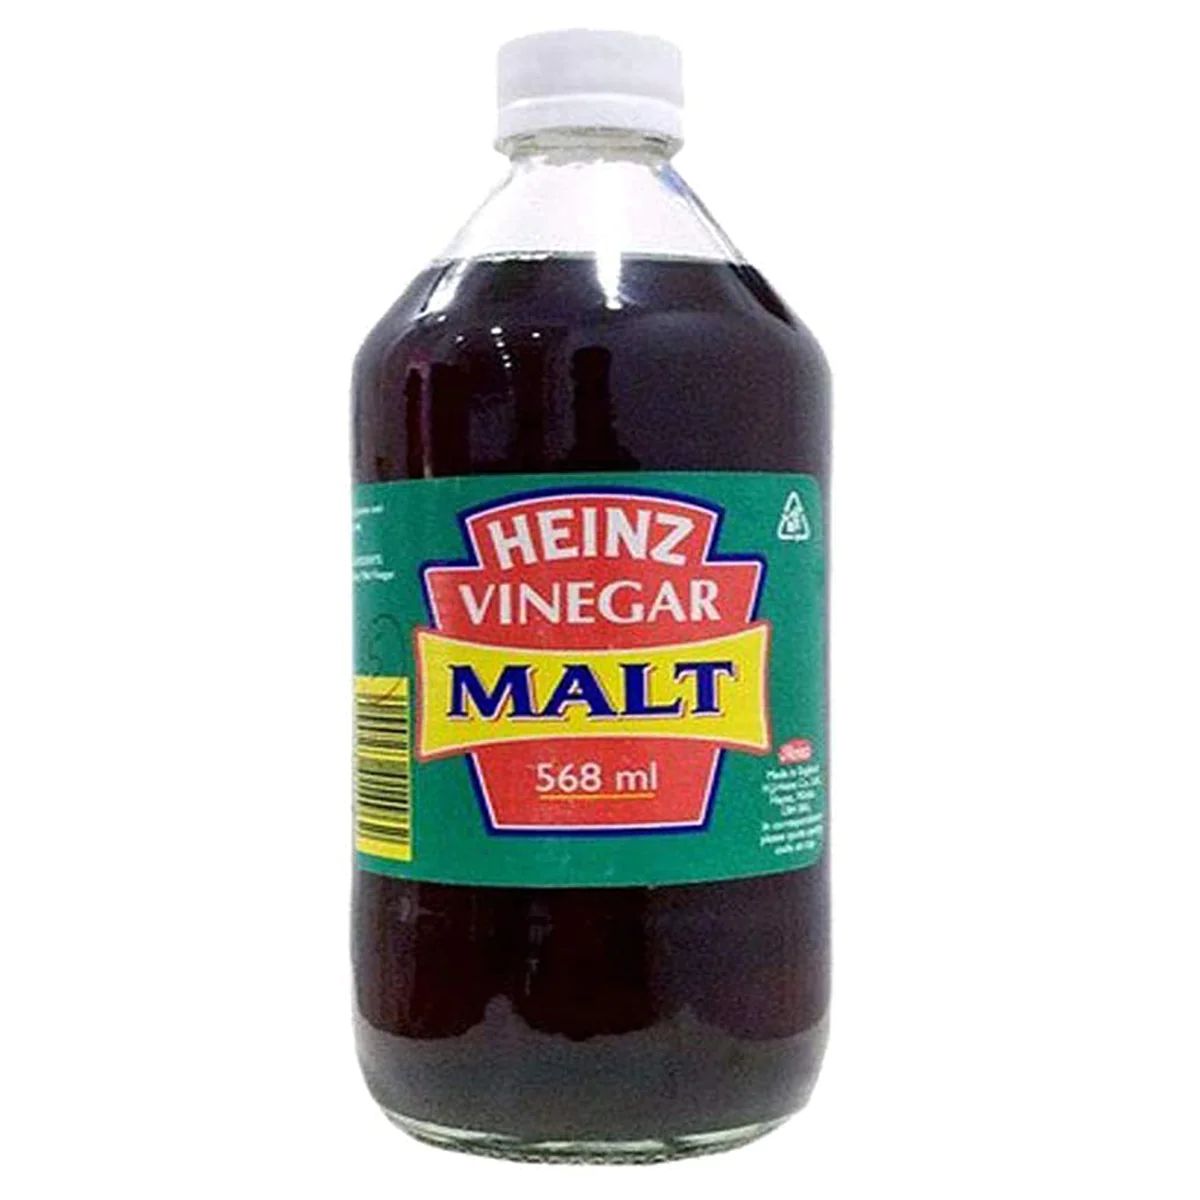 A bottle of Heinz - Vinegar Malt - 568ml.